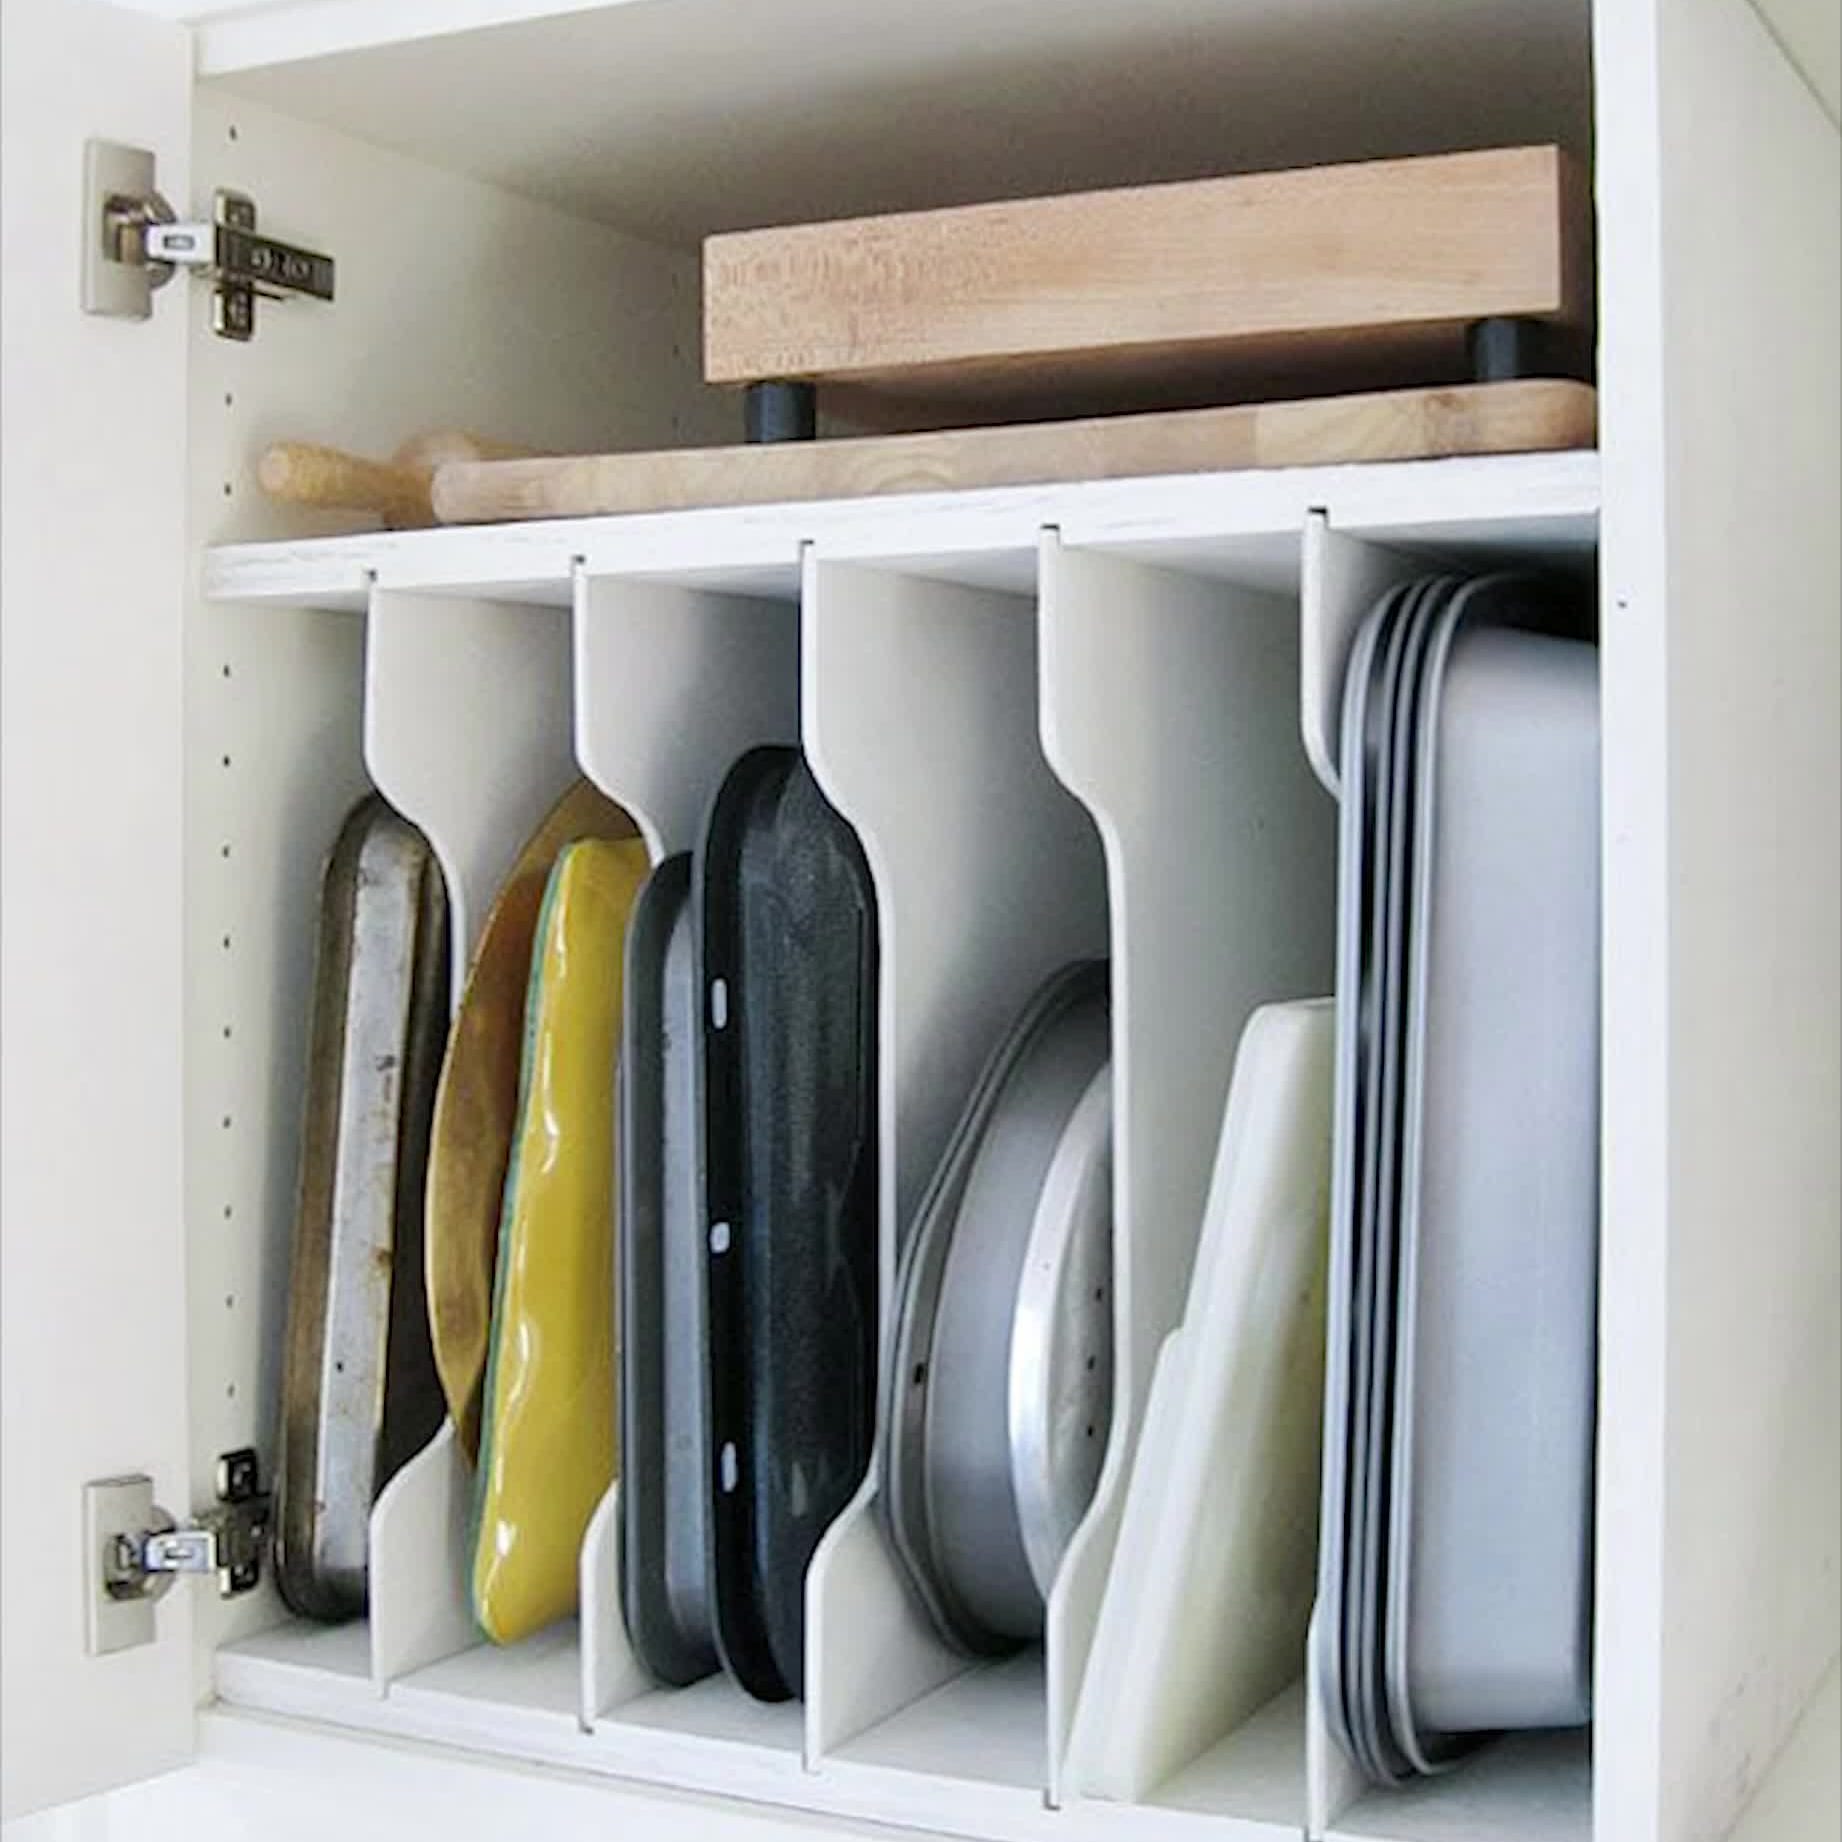 Kitchen Organization - Pull Out Shelves in Pantry - Remodelando la Casa